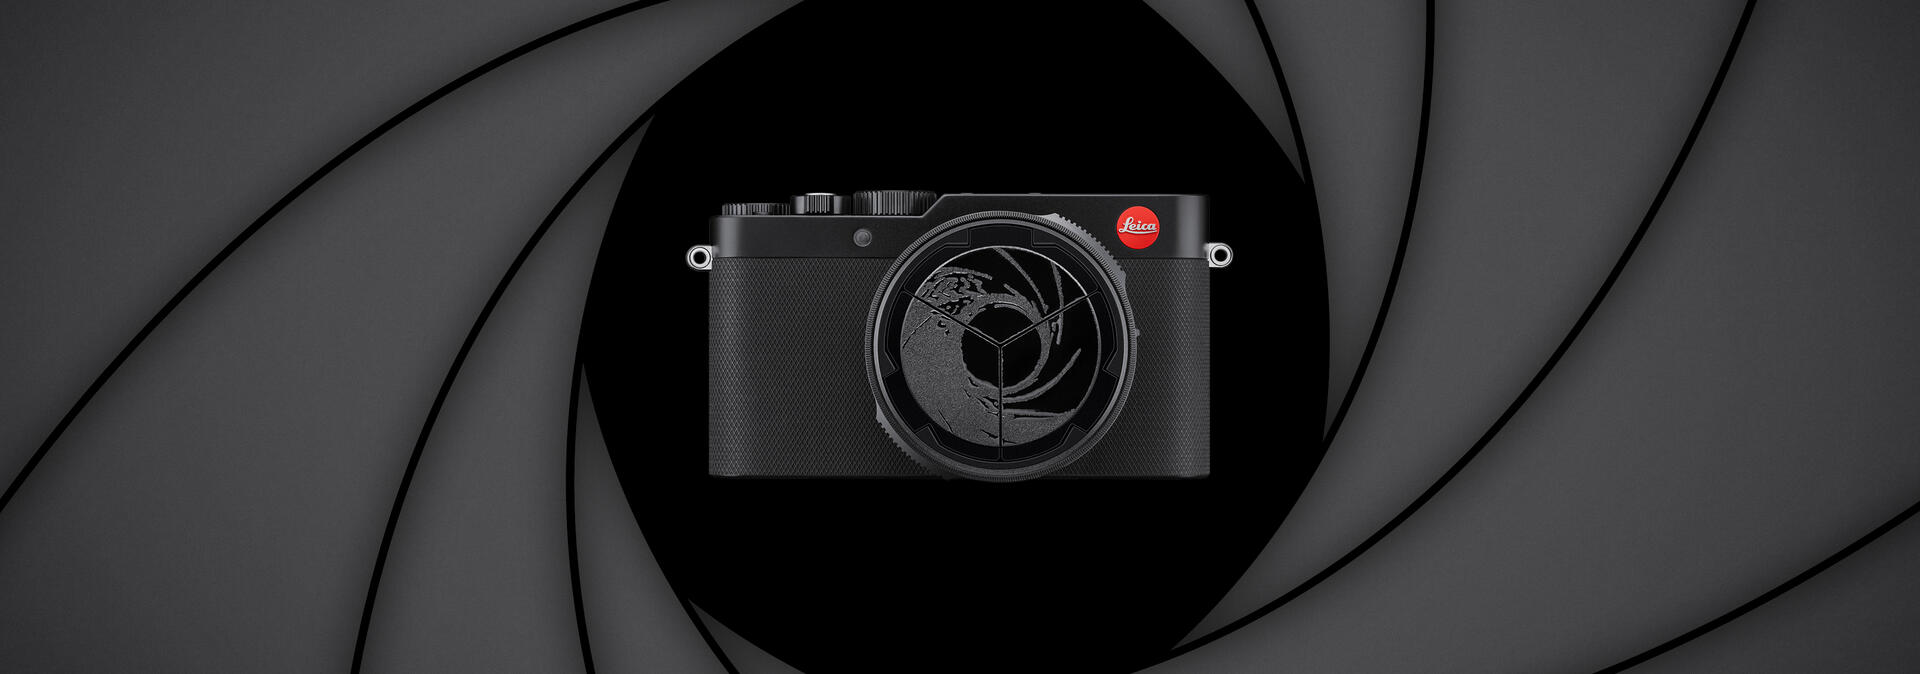 Leica D-Lux 7 007 Edition | Leica Camera US